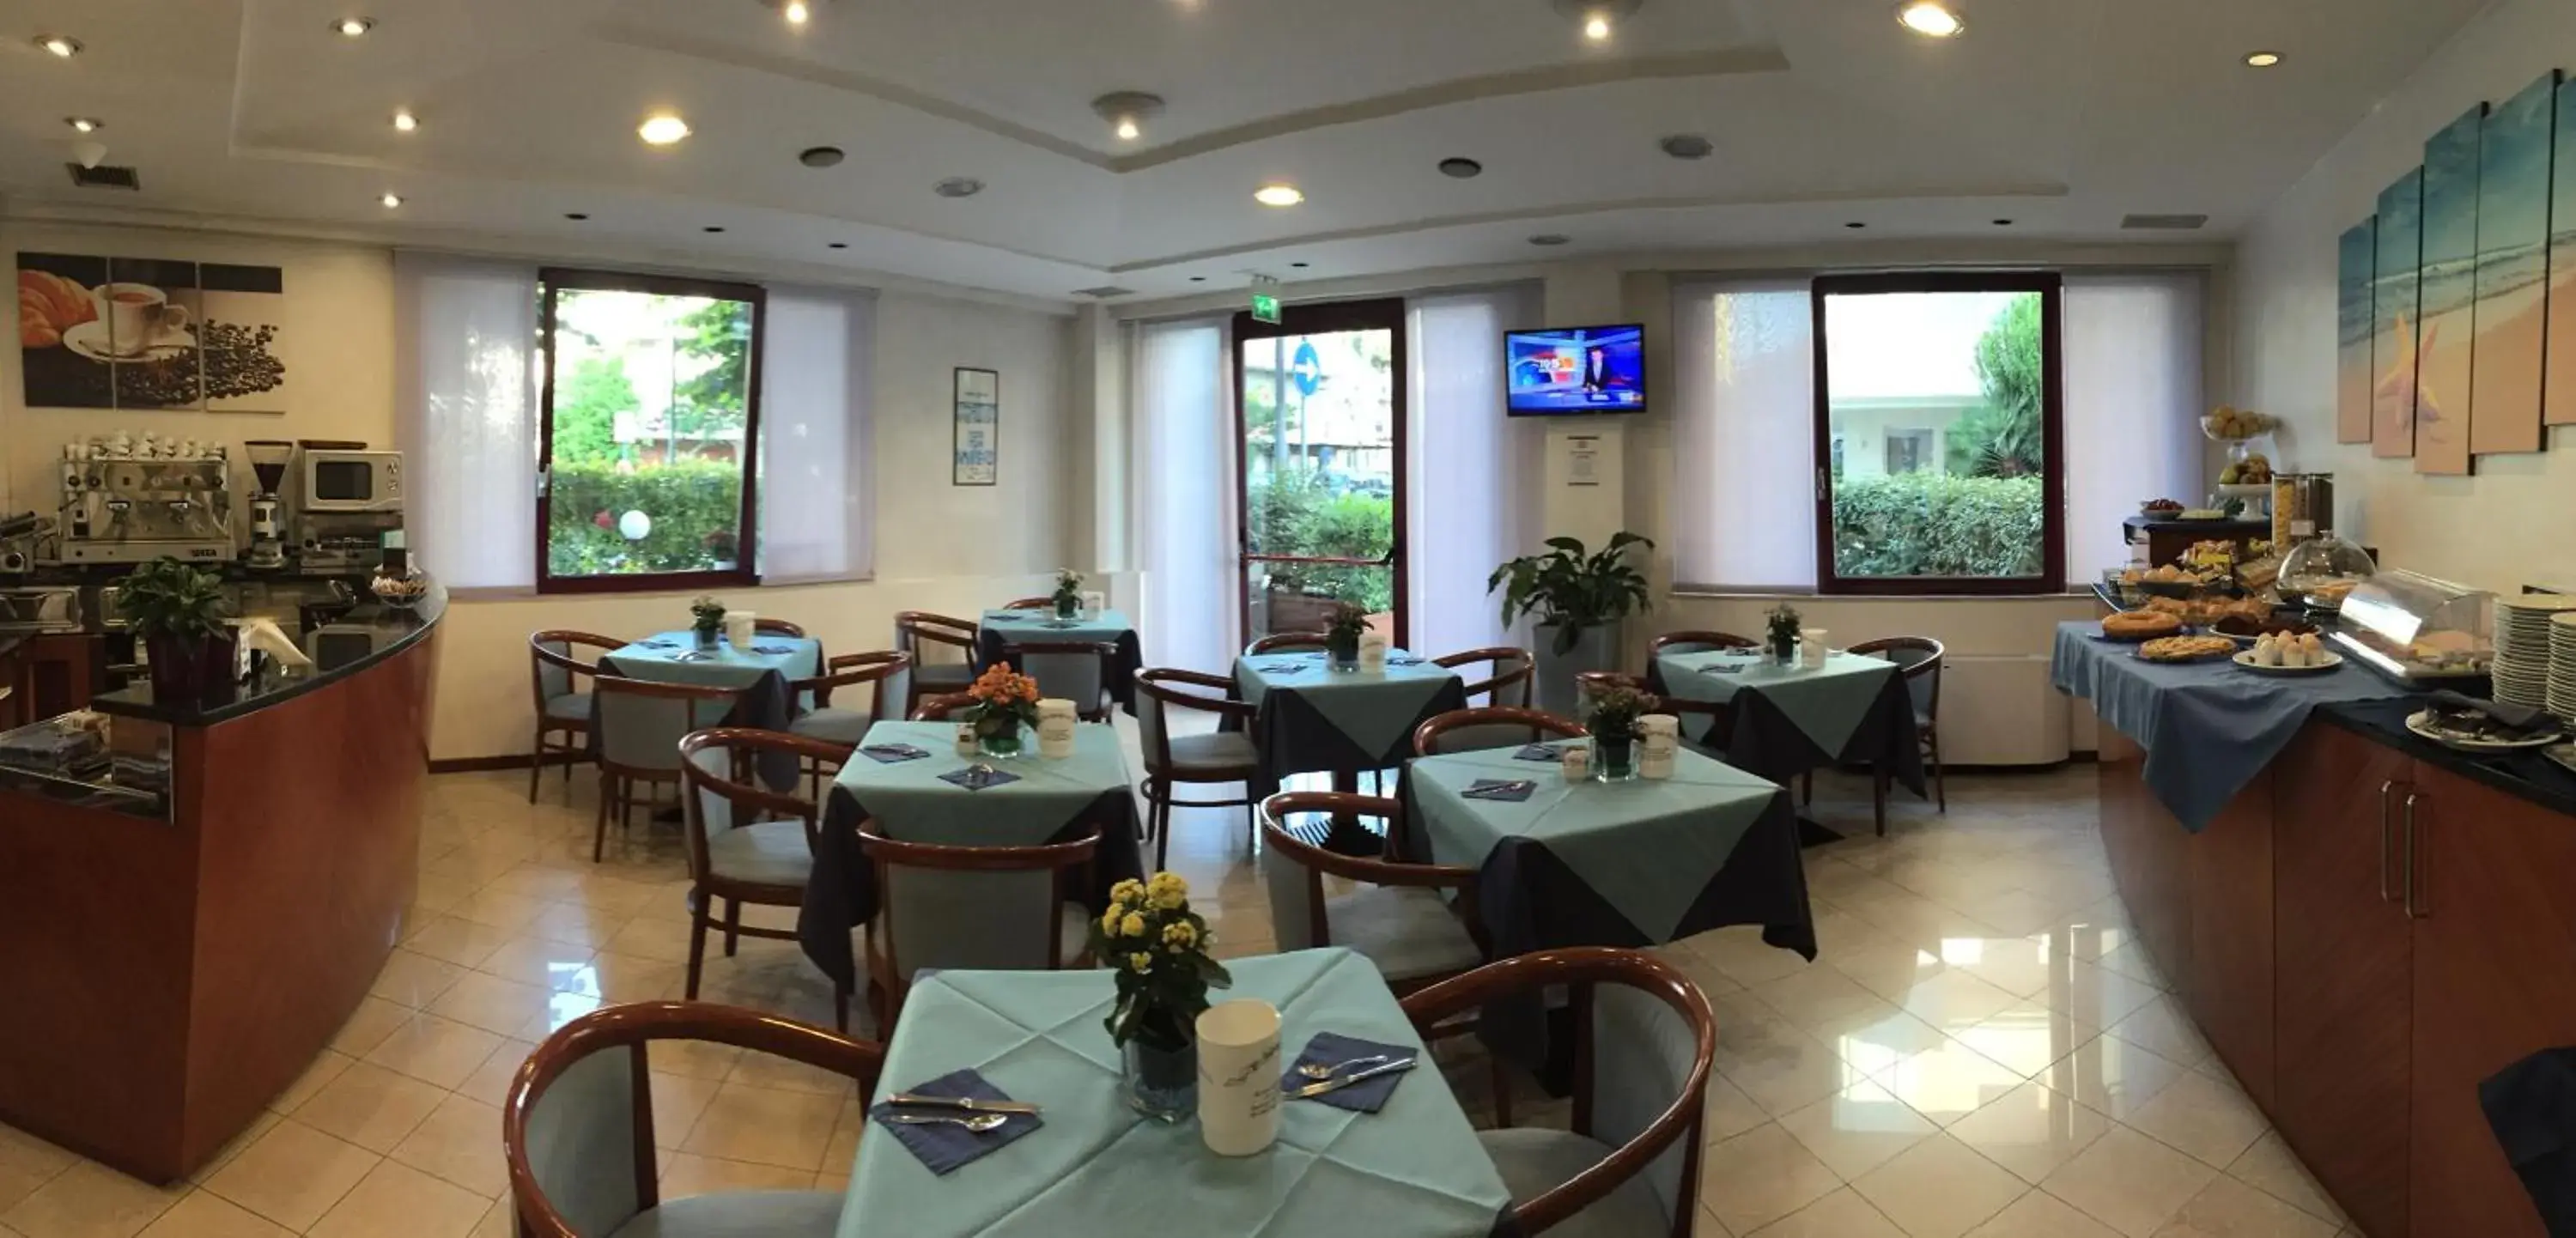 Buffet breakfast, Restaurant/Places to Eat in Hotel Arcangelo